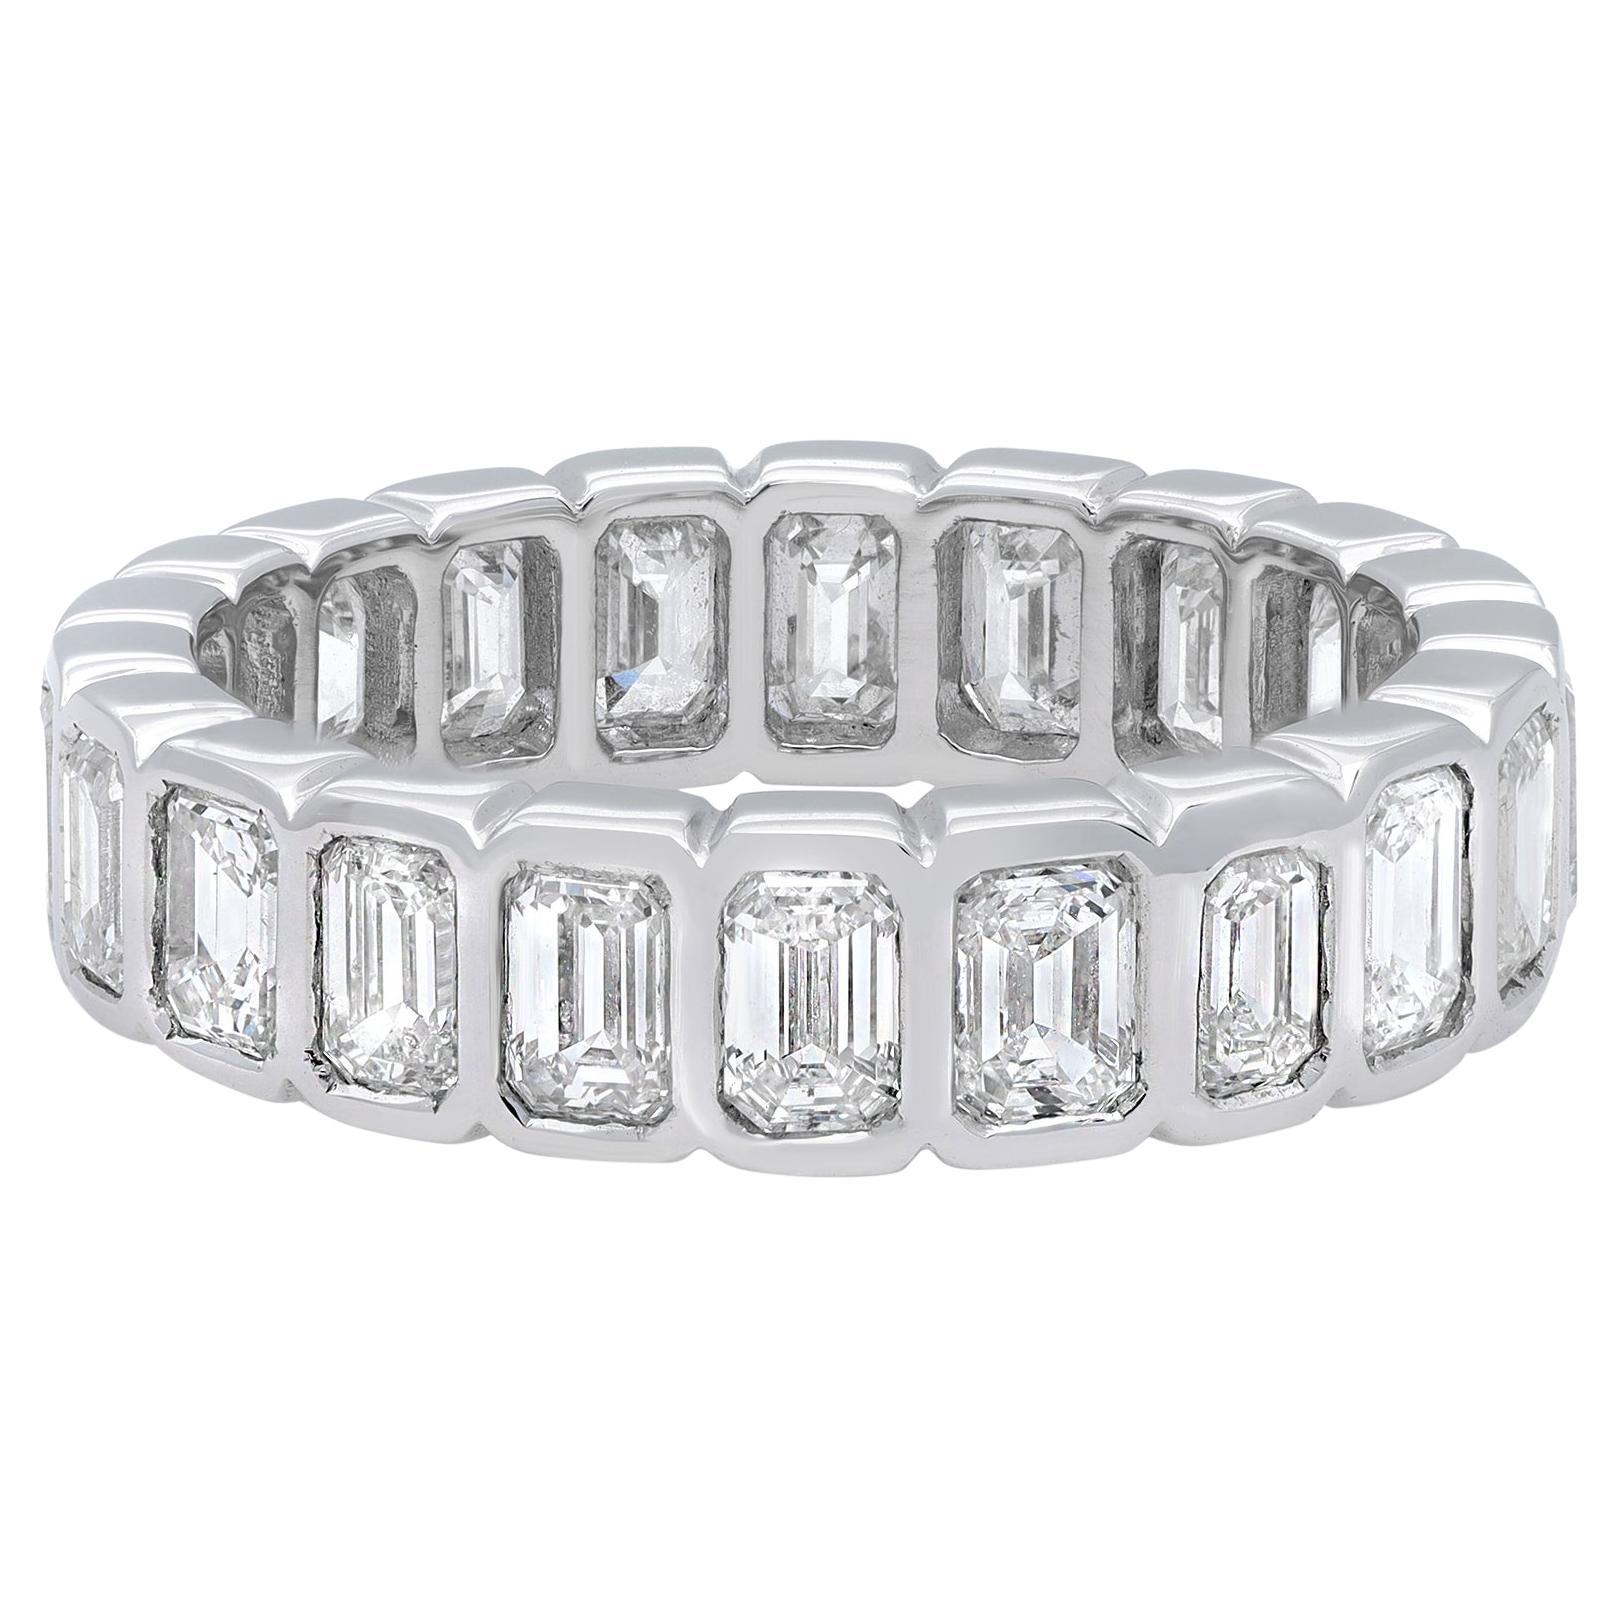 3.12Cttw Bezel Set Emerald Cut Diamond Eternity Band Ring 14K White Gold Size 6 For Sale